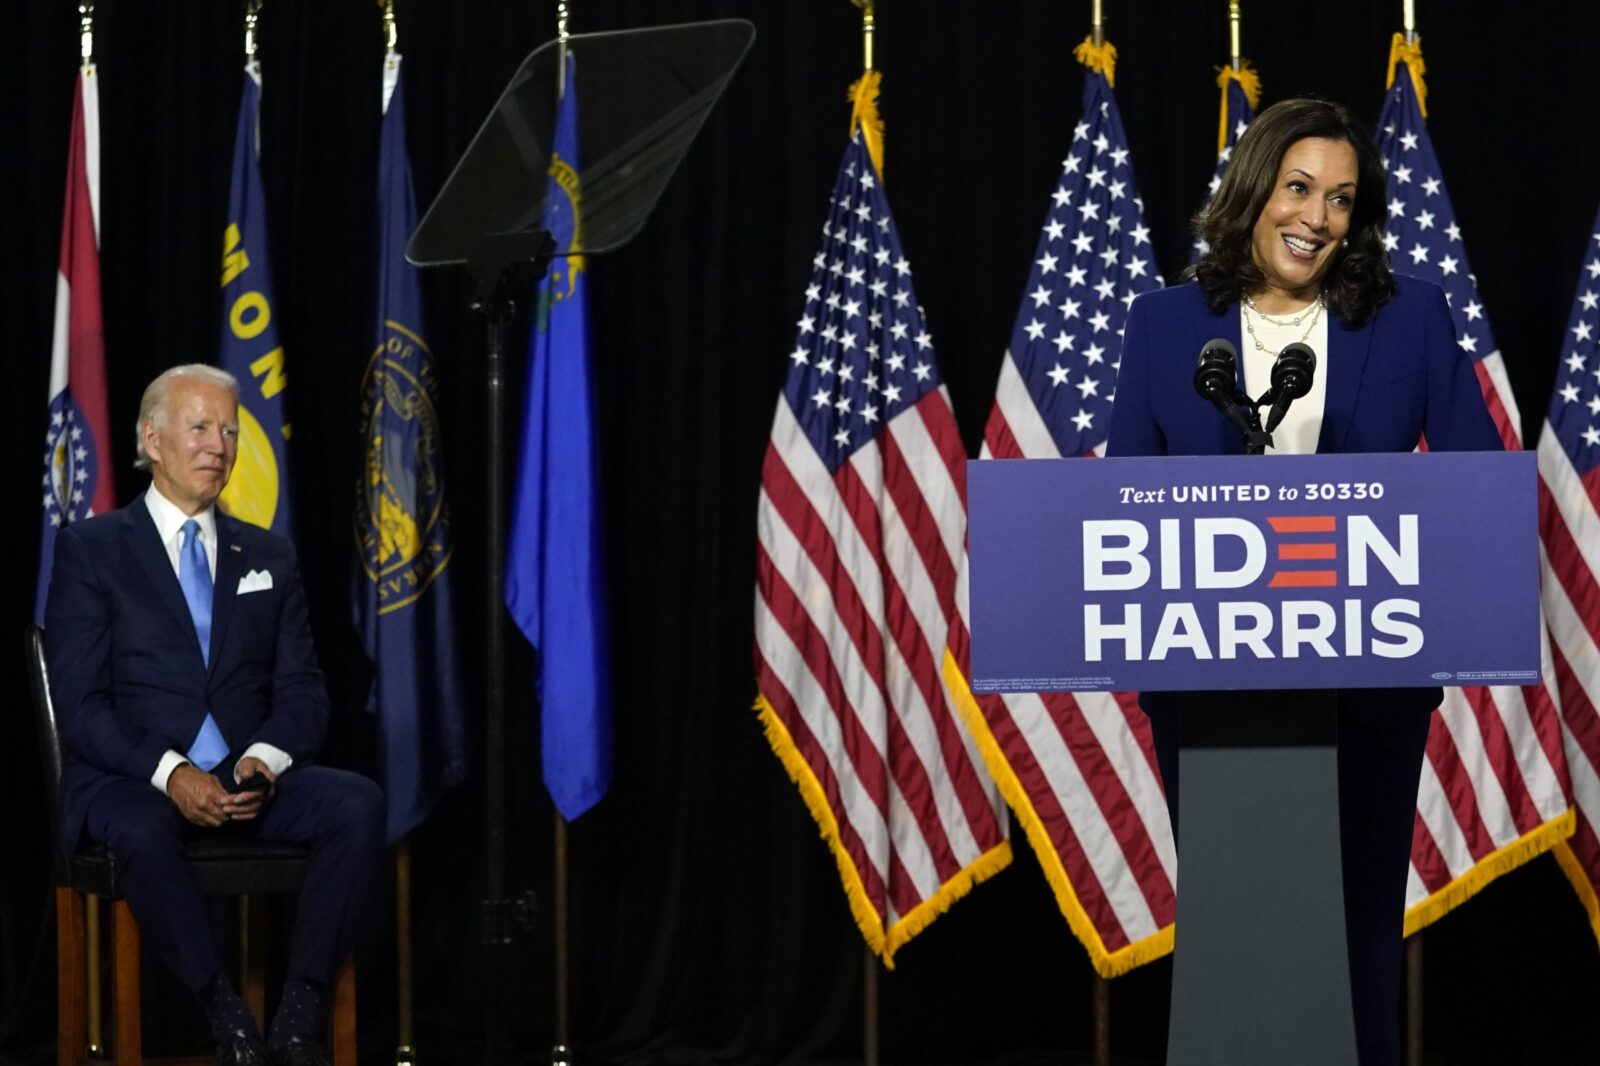 Harris and Biden